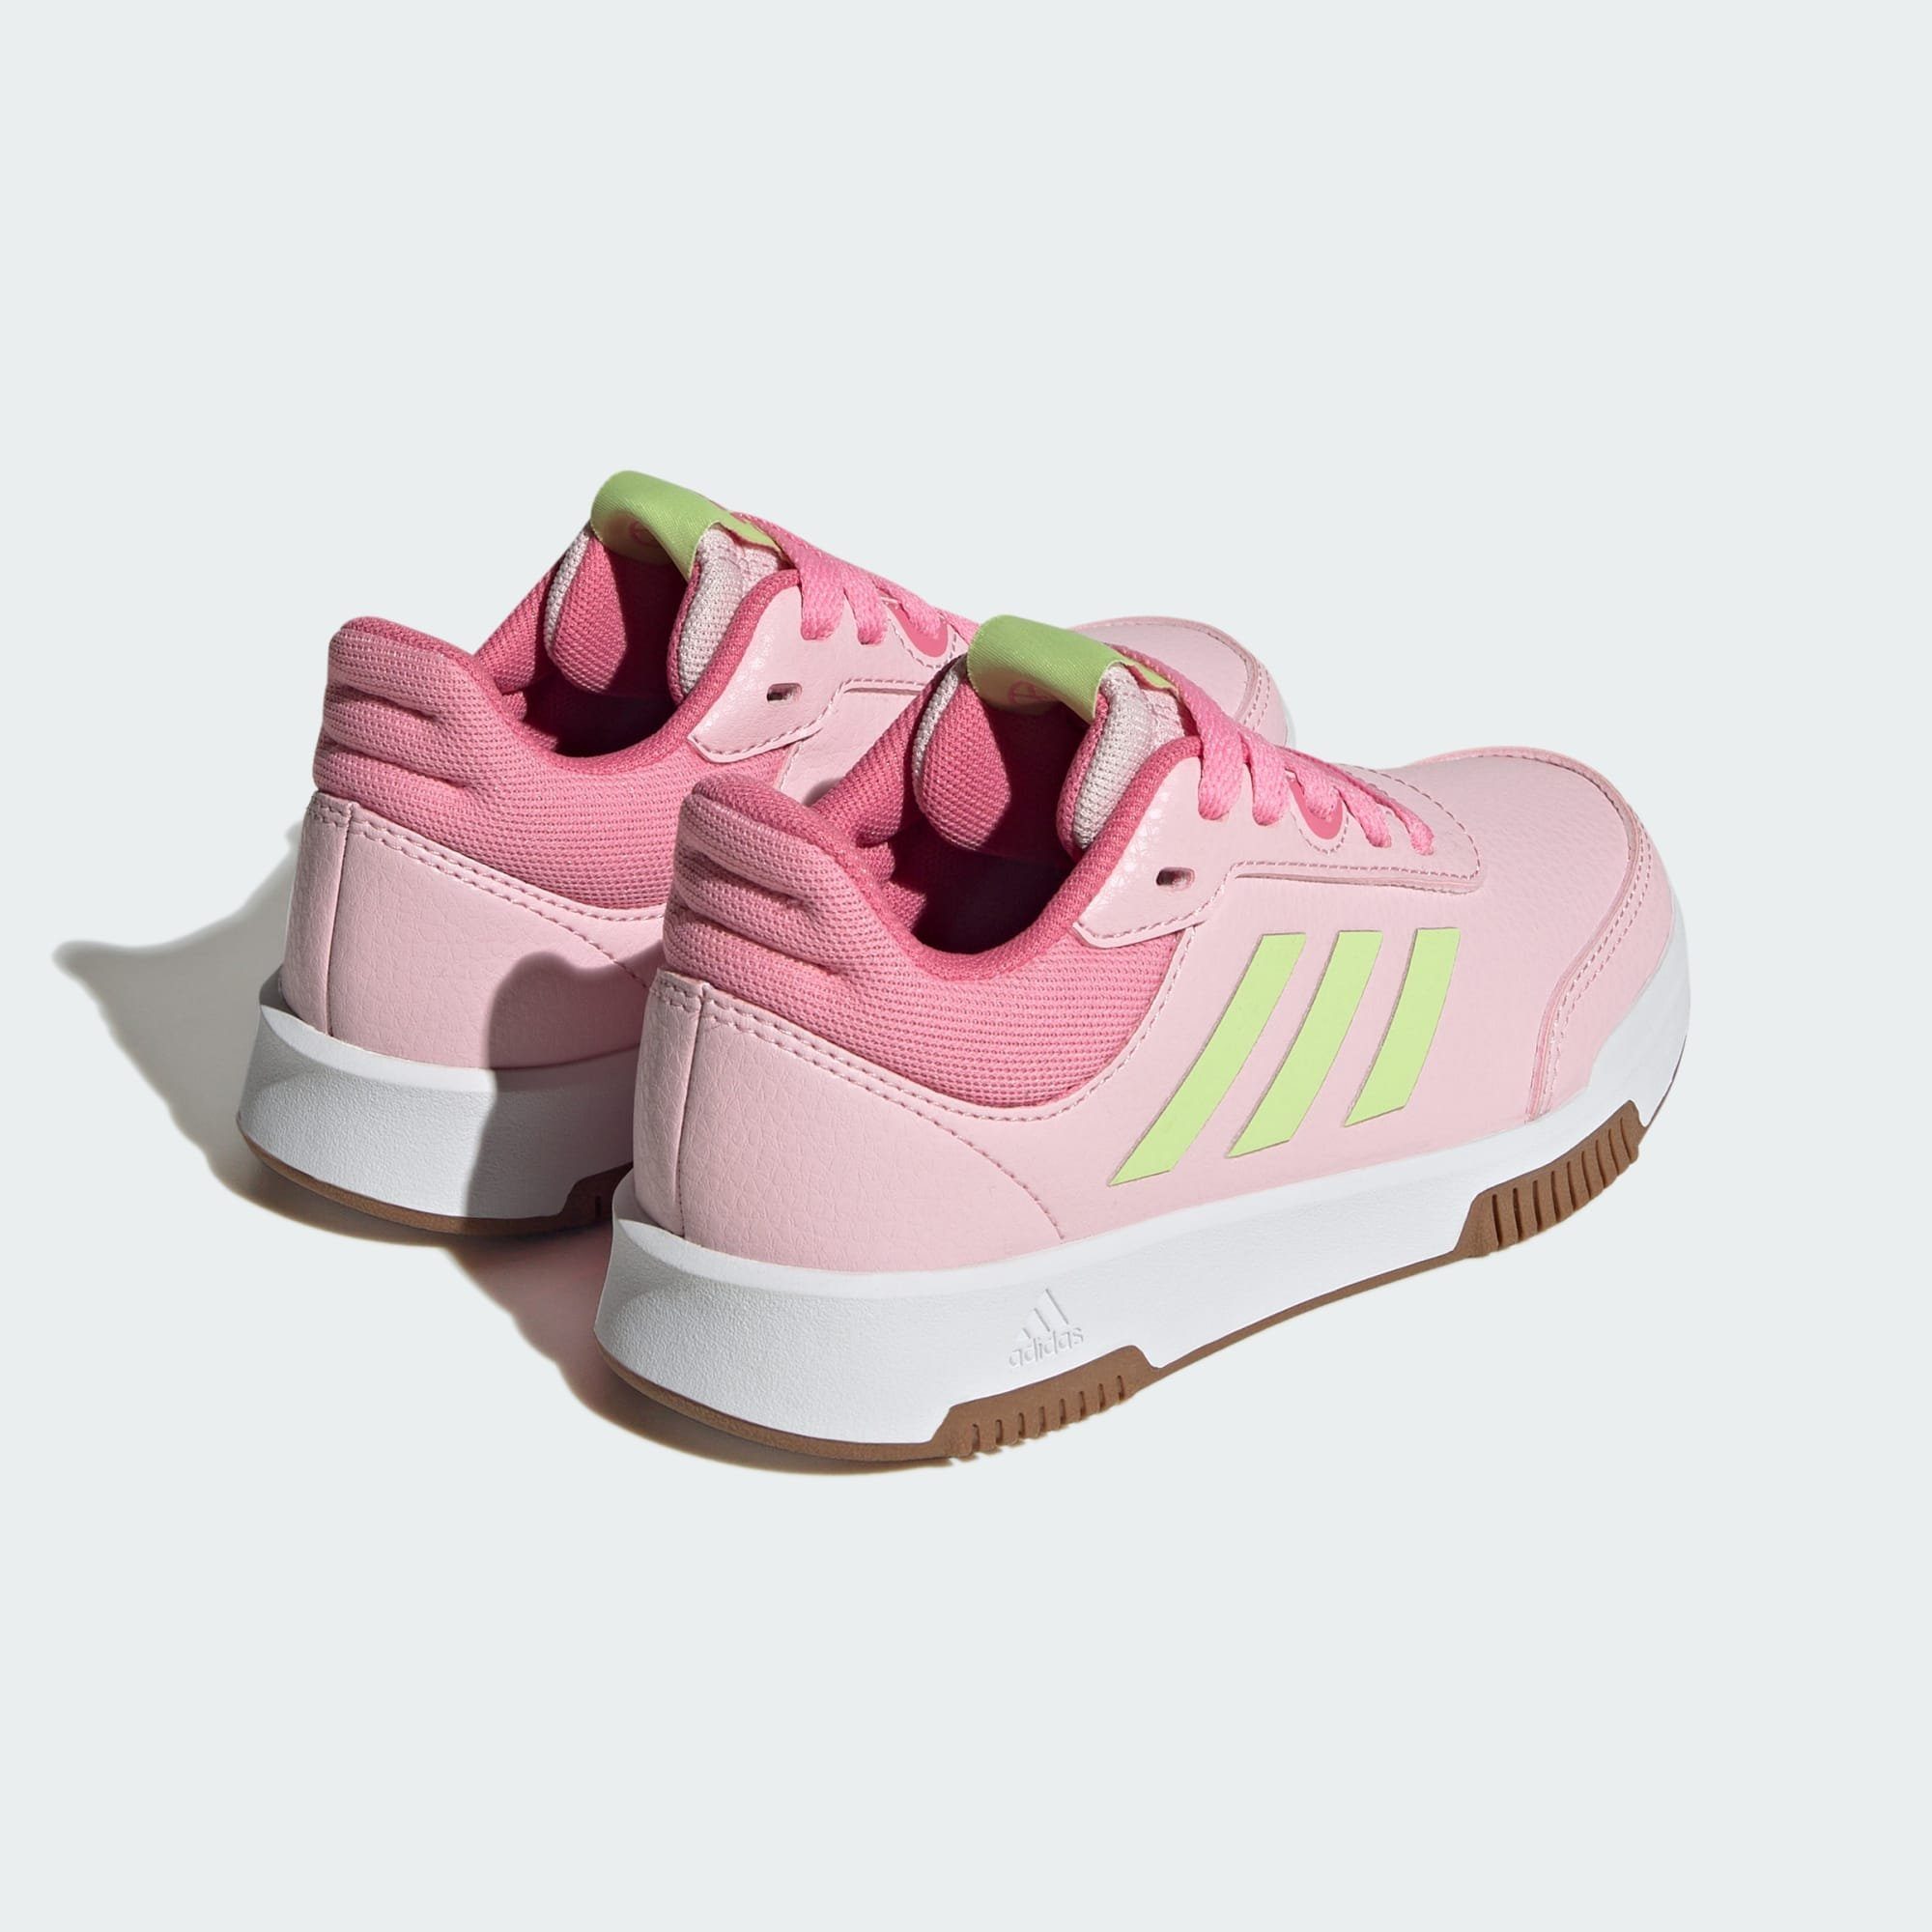 adidas Lime SPORT Pulse / TENSAUR SCHUH LACE Pink Pink Clear / Sneaker Bliss TRAINING Sportswear